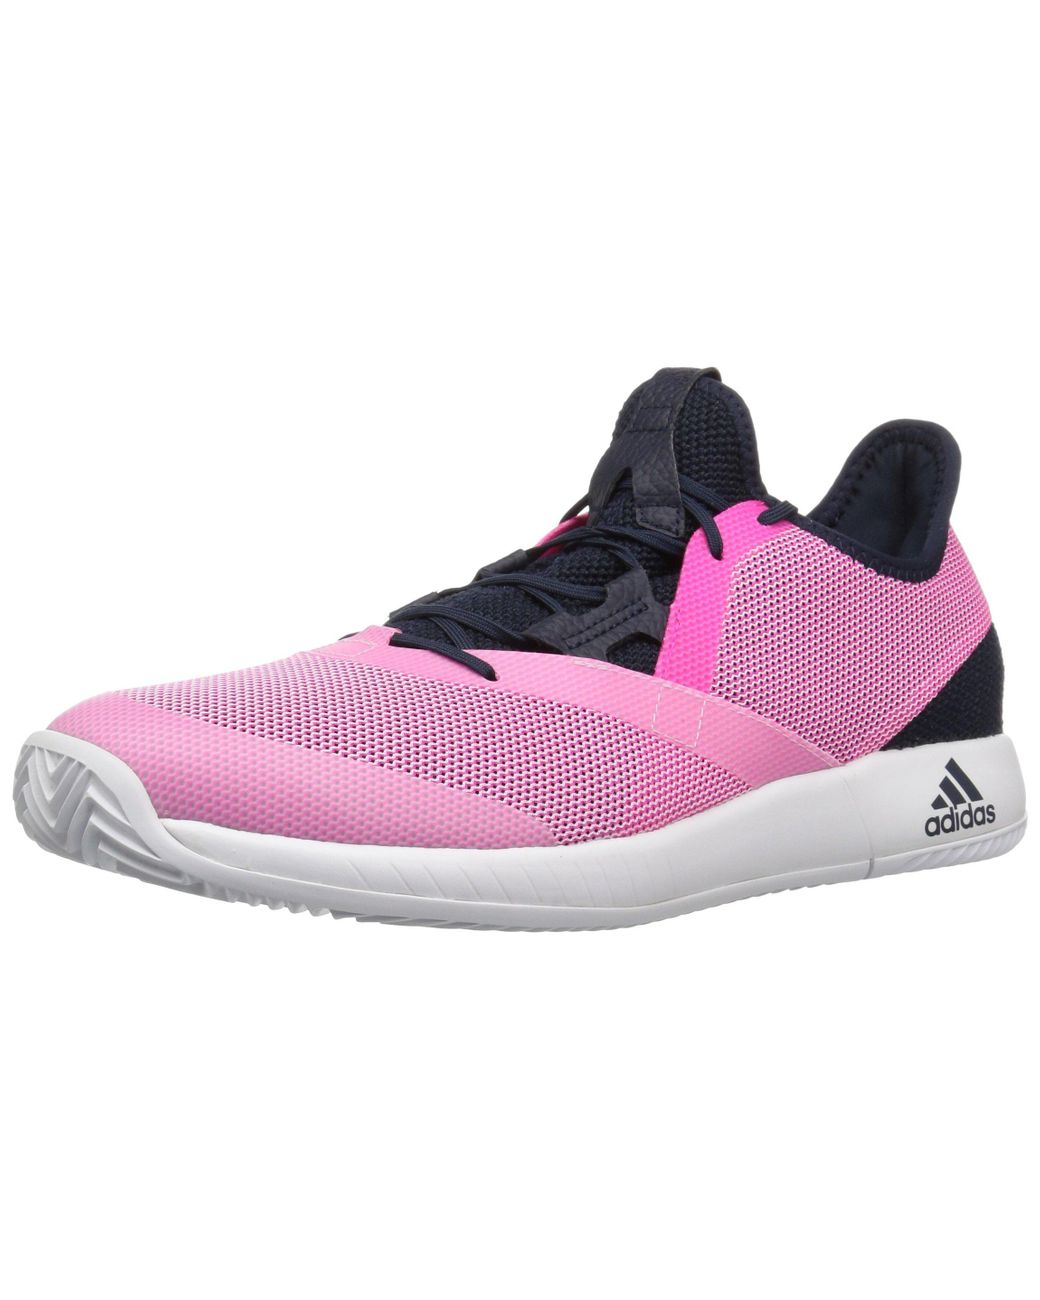 adidas Adizero Defiant Bounce Tennis Shoe in Pink - Save 46% - Lyst